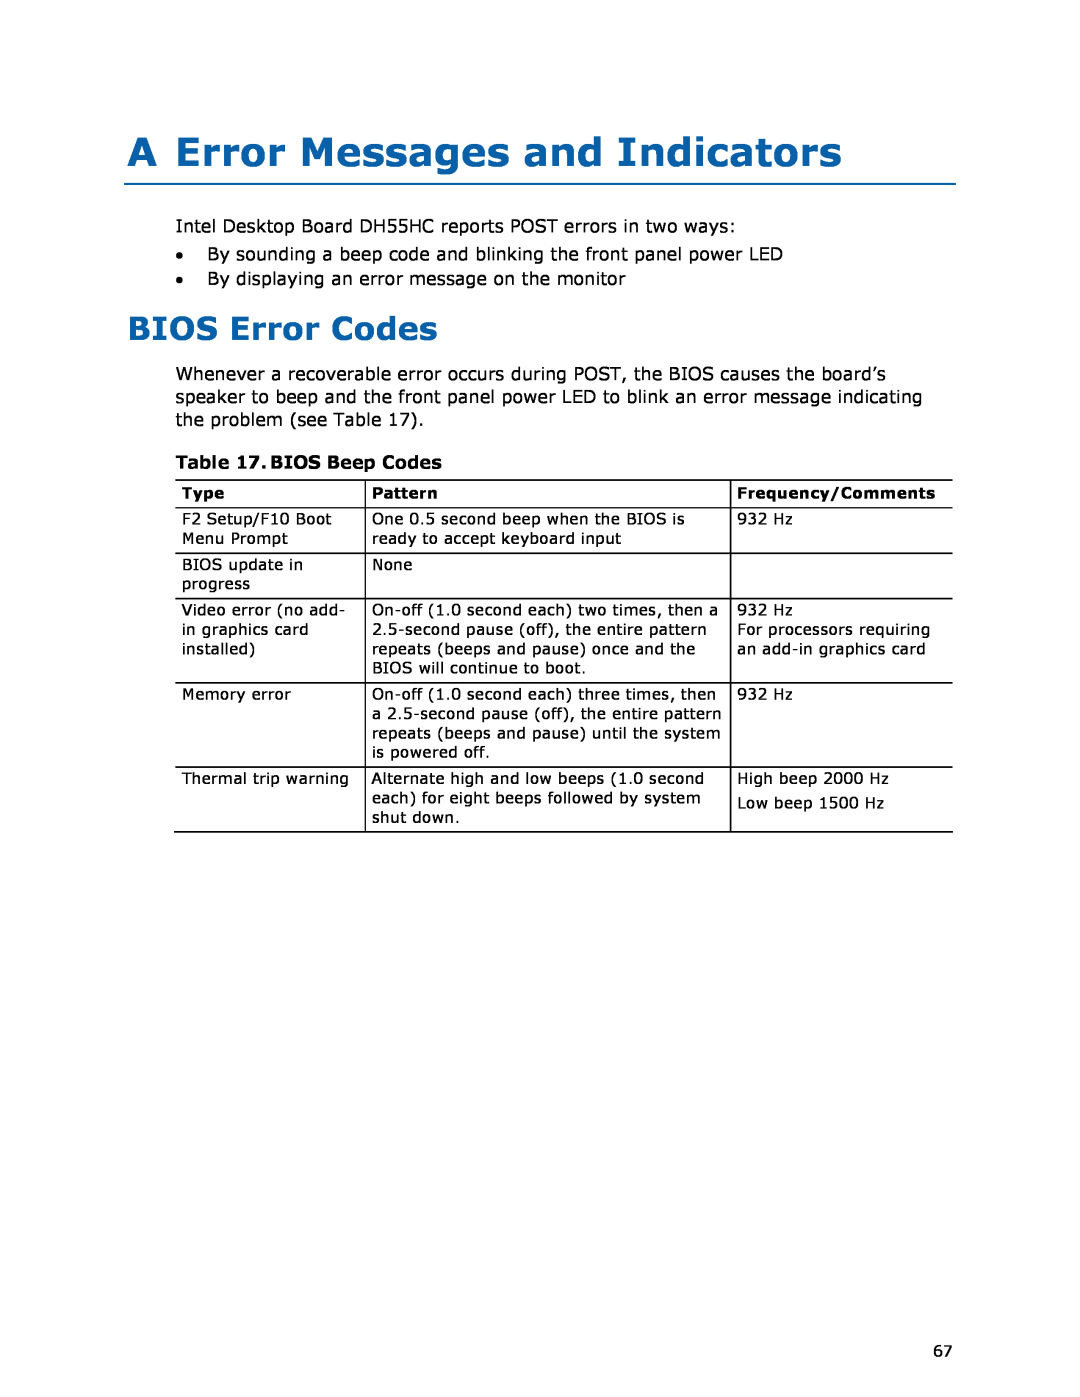 Intel BOXDH55HC manual A Error Messages and Indicators, BIOS Error Codes, BIOS Beep Codes 